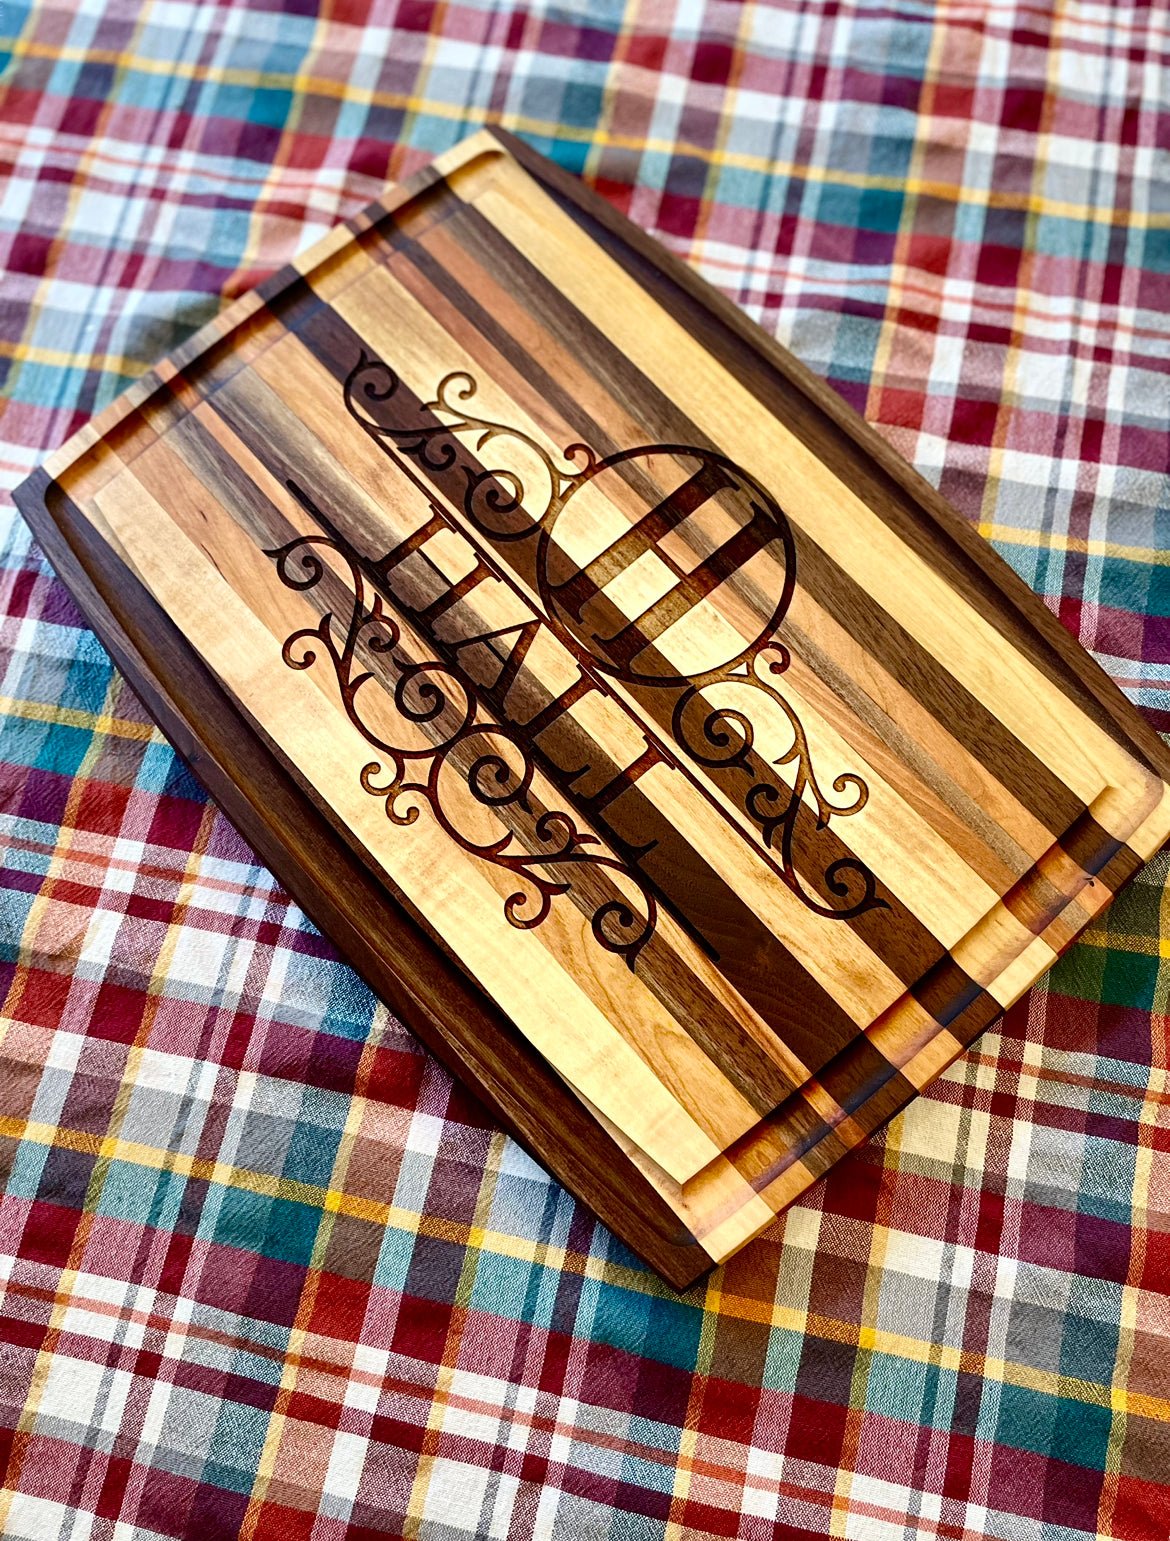 Handmade Hardwood Cutting Board - Personalized